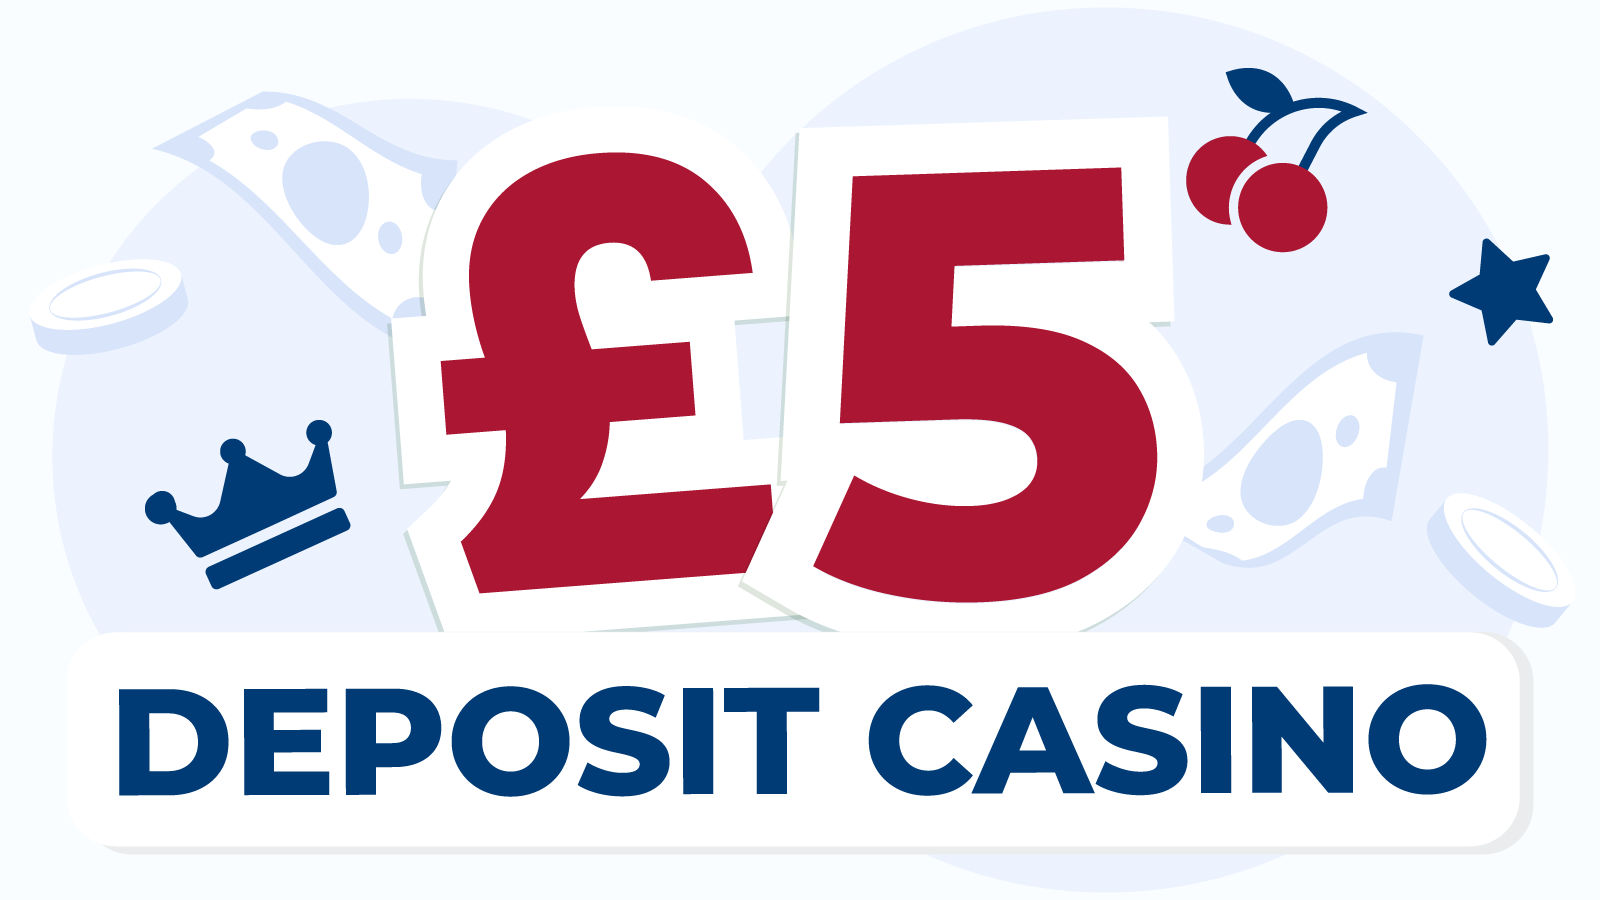 £5 deposit online casinos